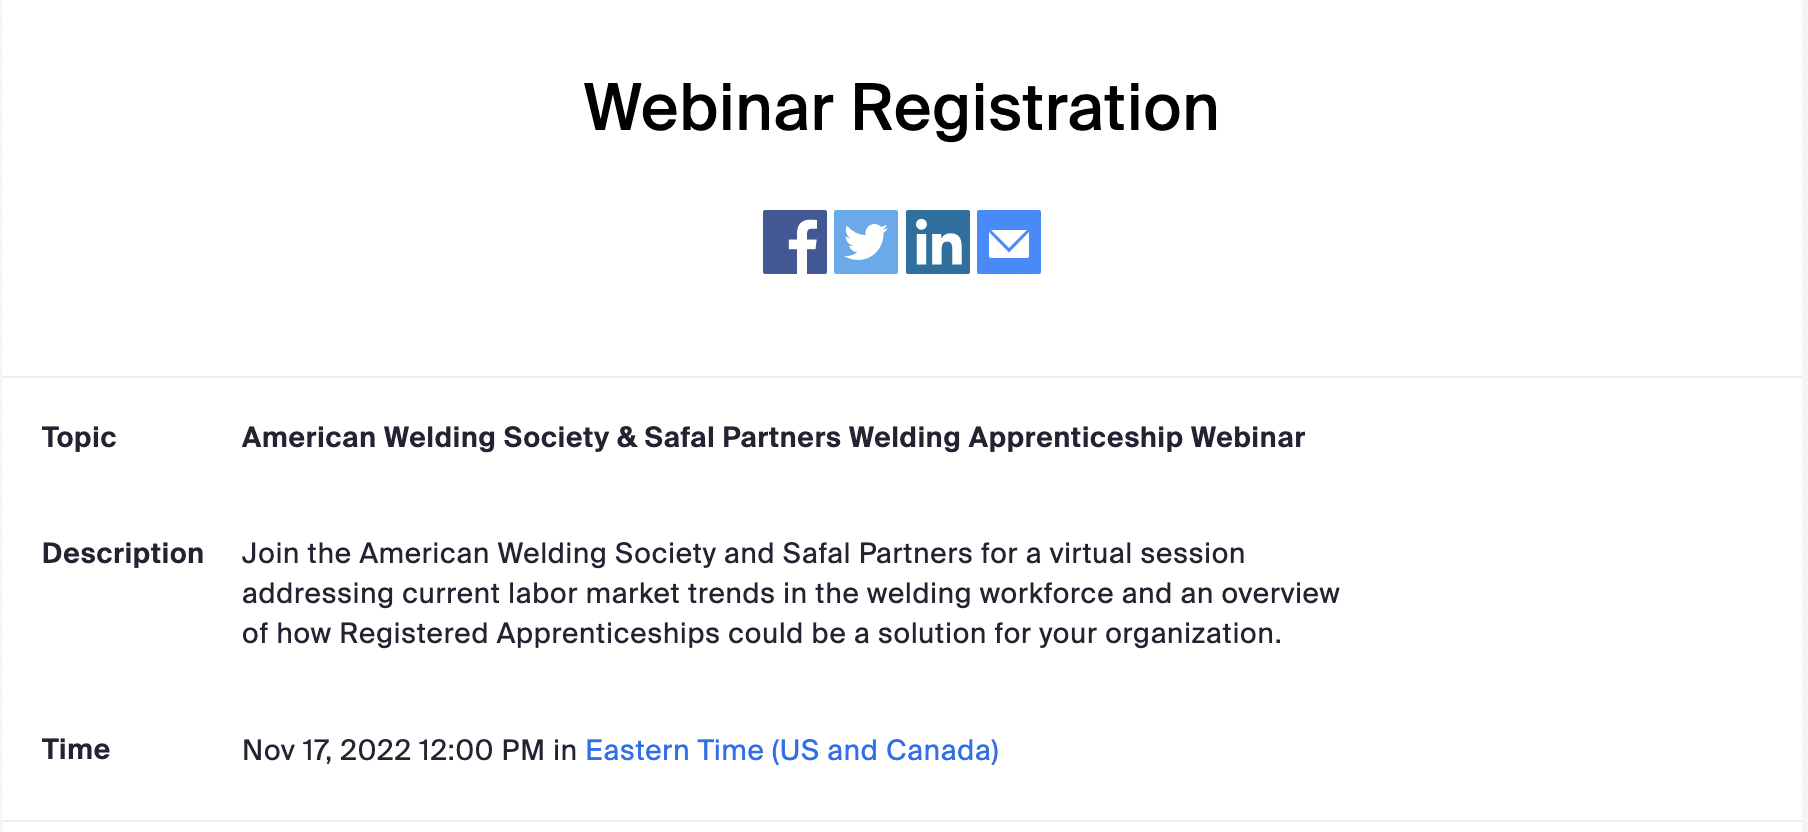 American Welding Society & Safal Partners Welding Apprenticeship Webinar. 